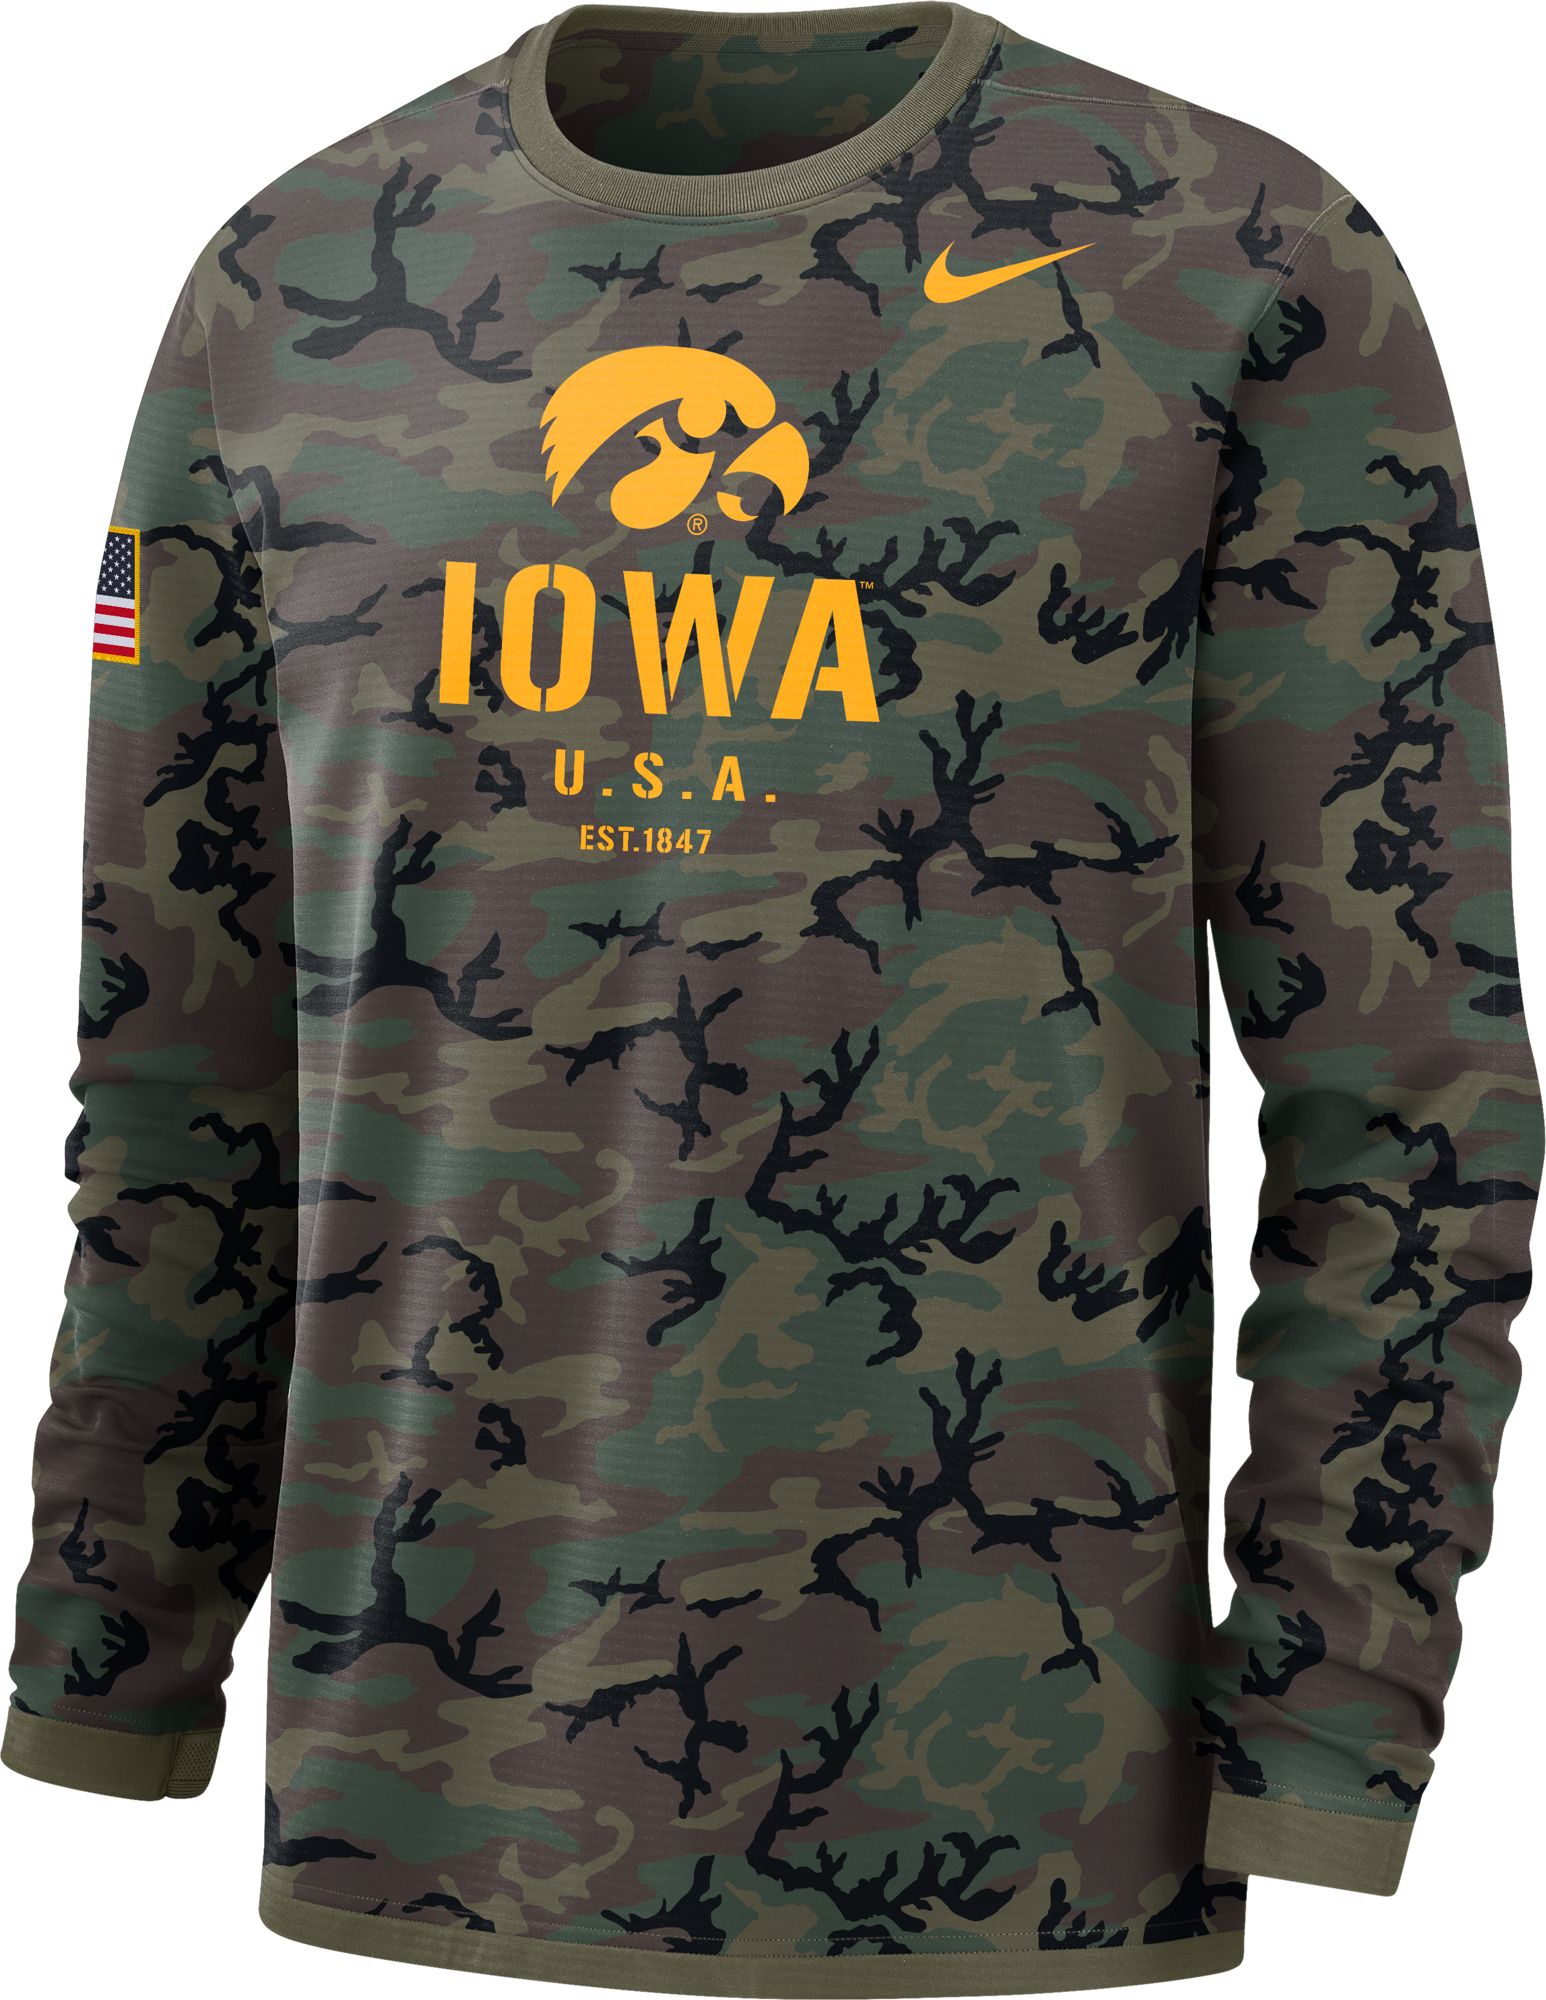 Nike / Men's Iowa Hawkeyes Camo Military Appreciation Long